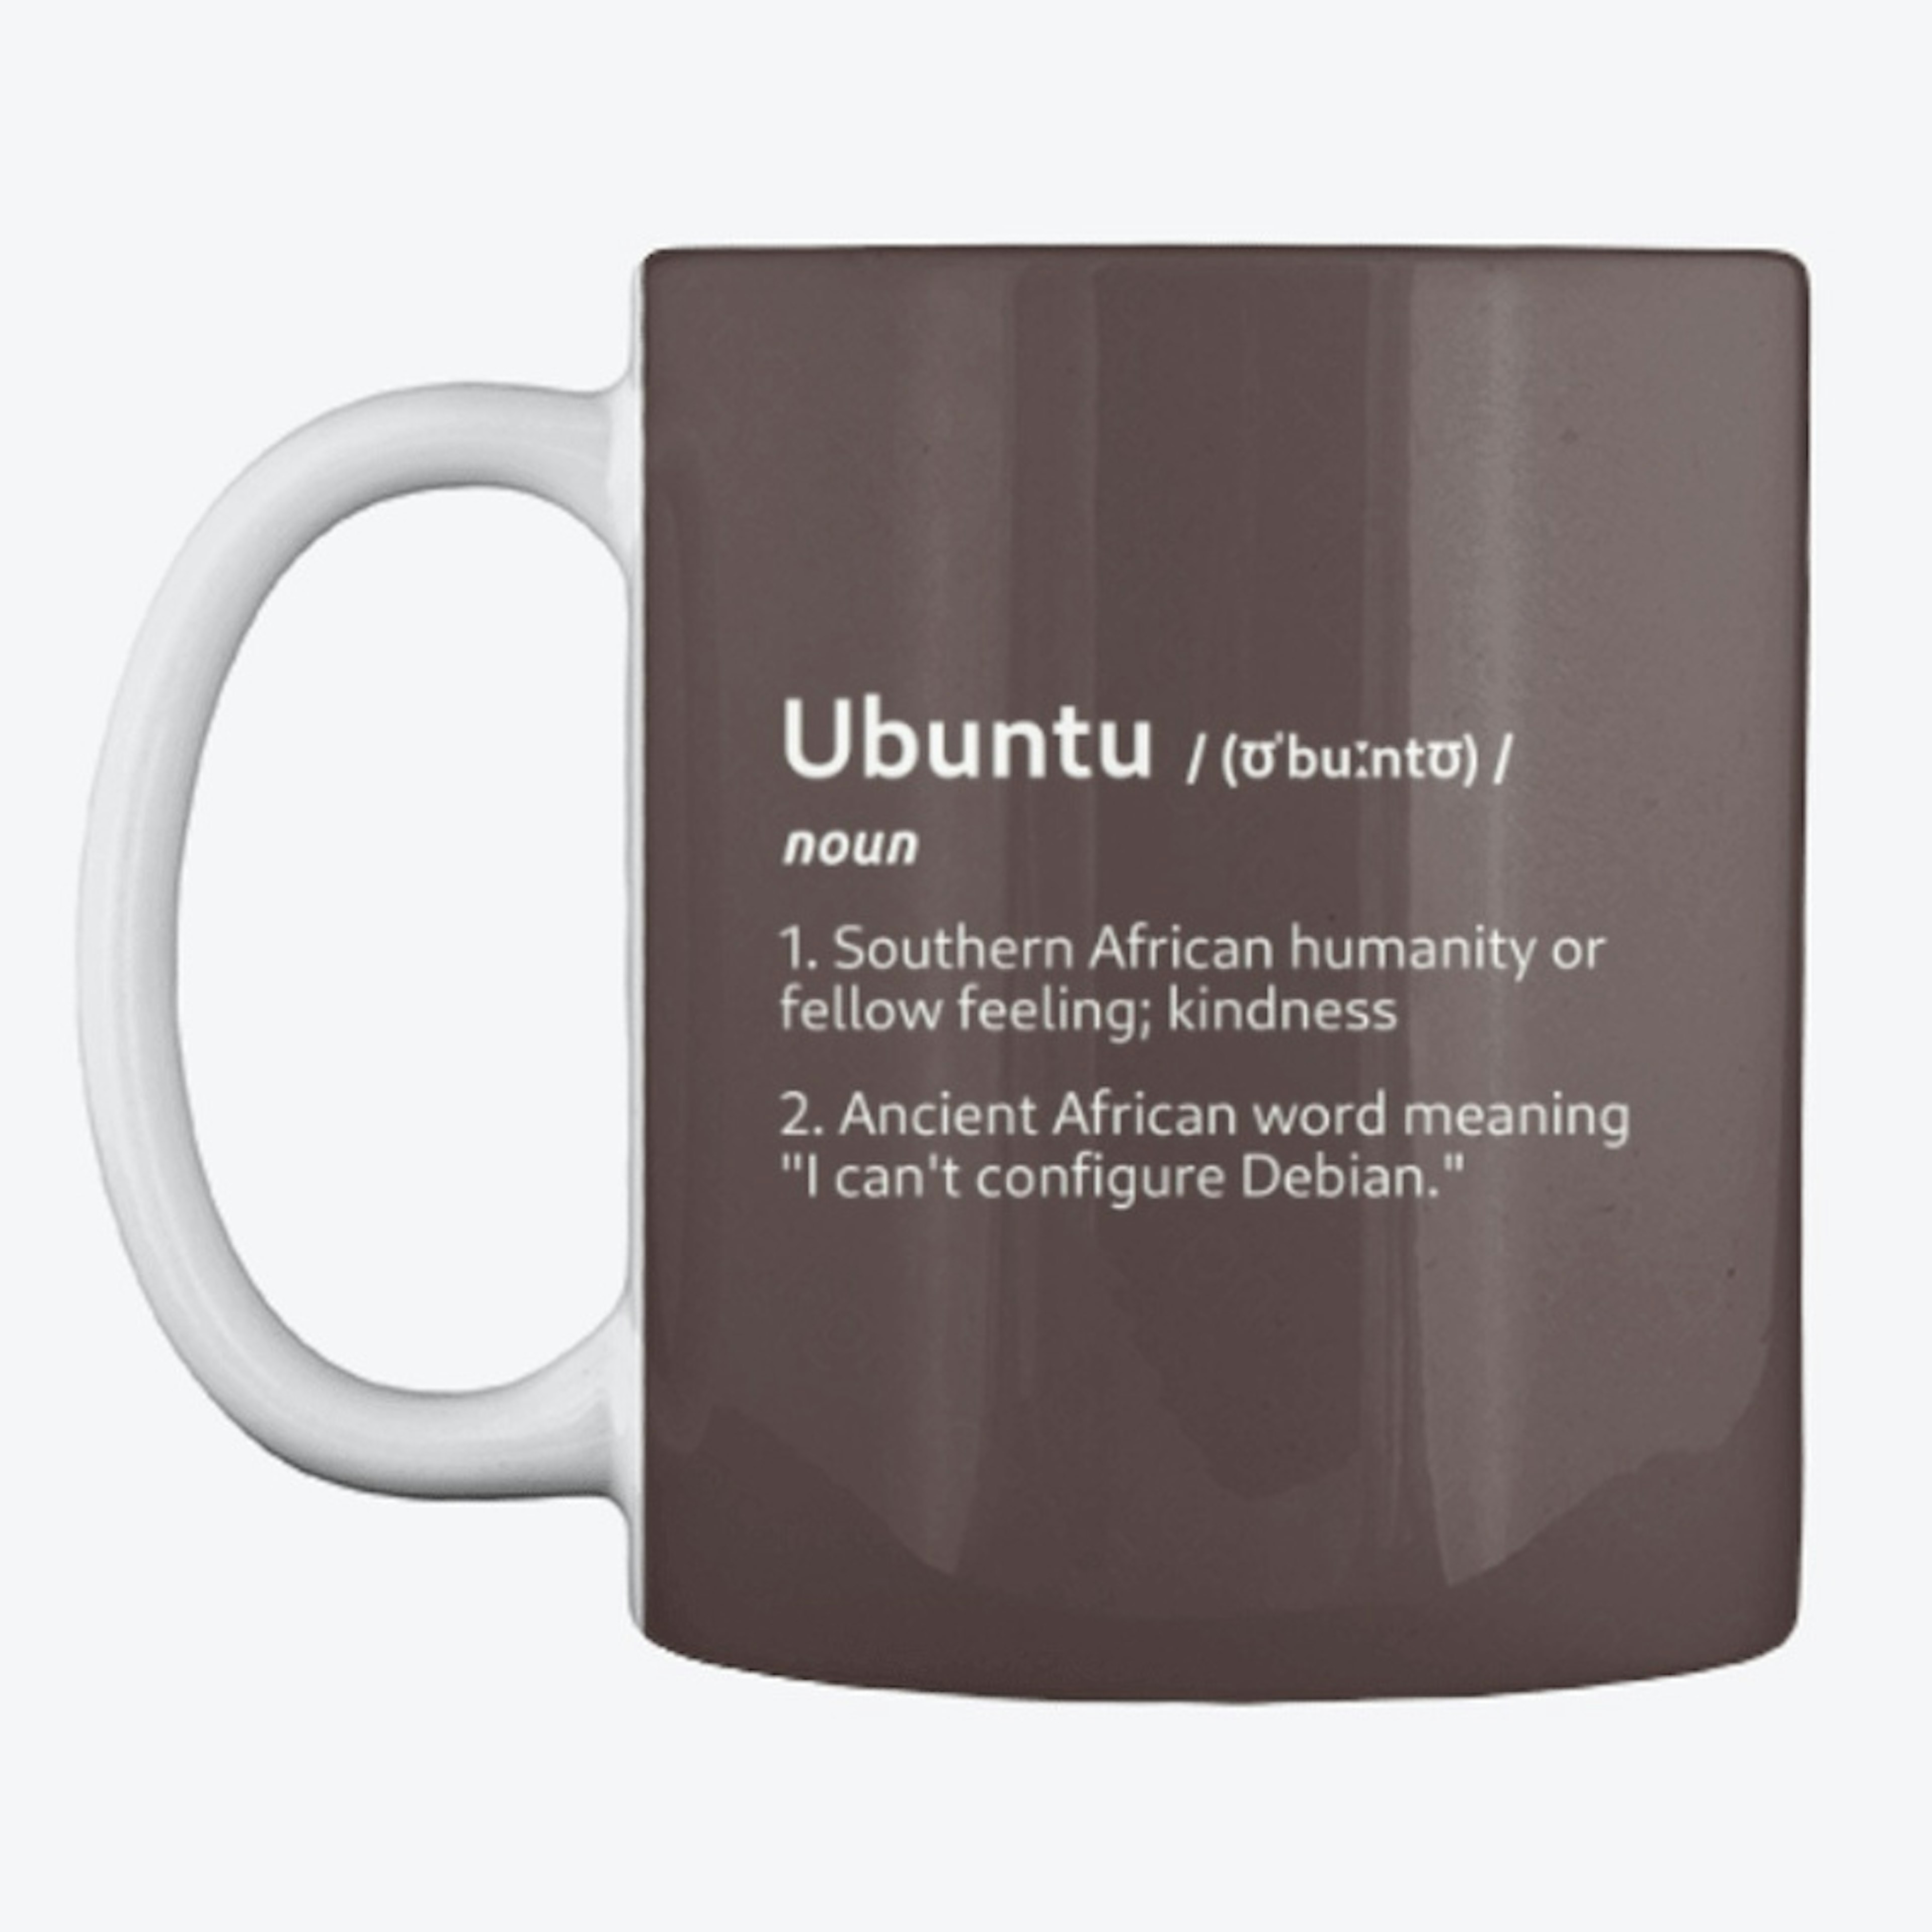 Ubuntu Definition Mug